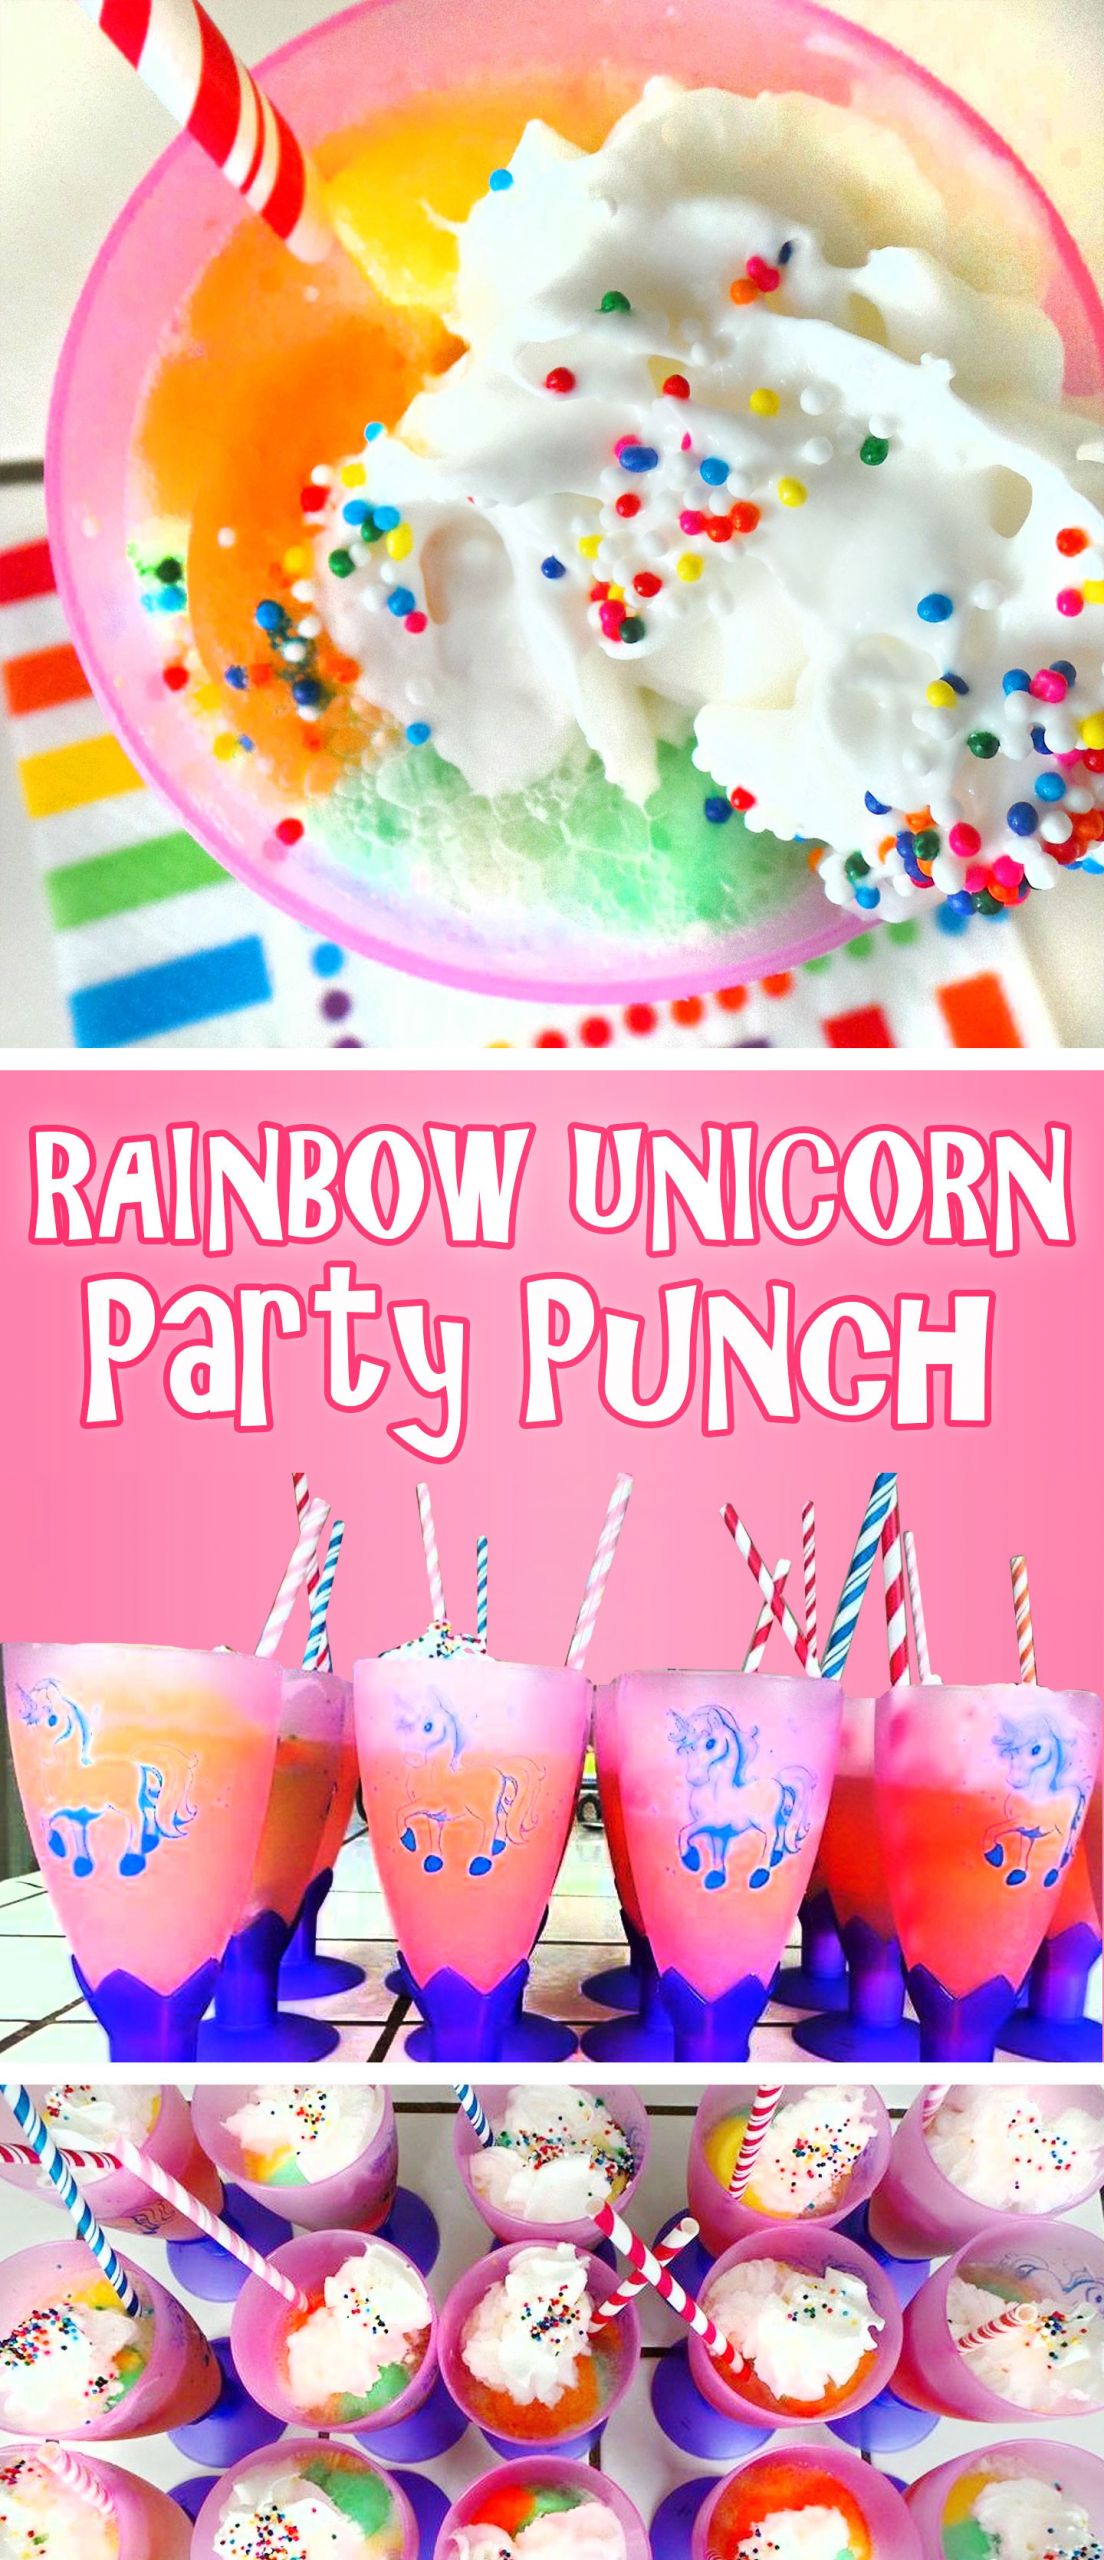 Unicorn Party Ideas Food
 Rainbow Unicorn Party Punch